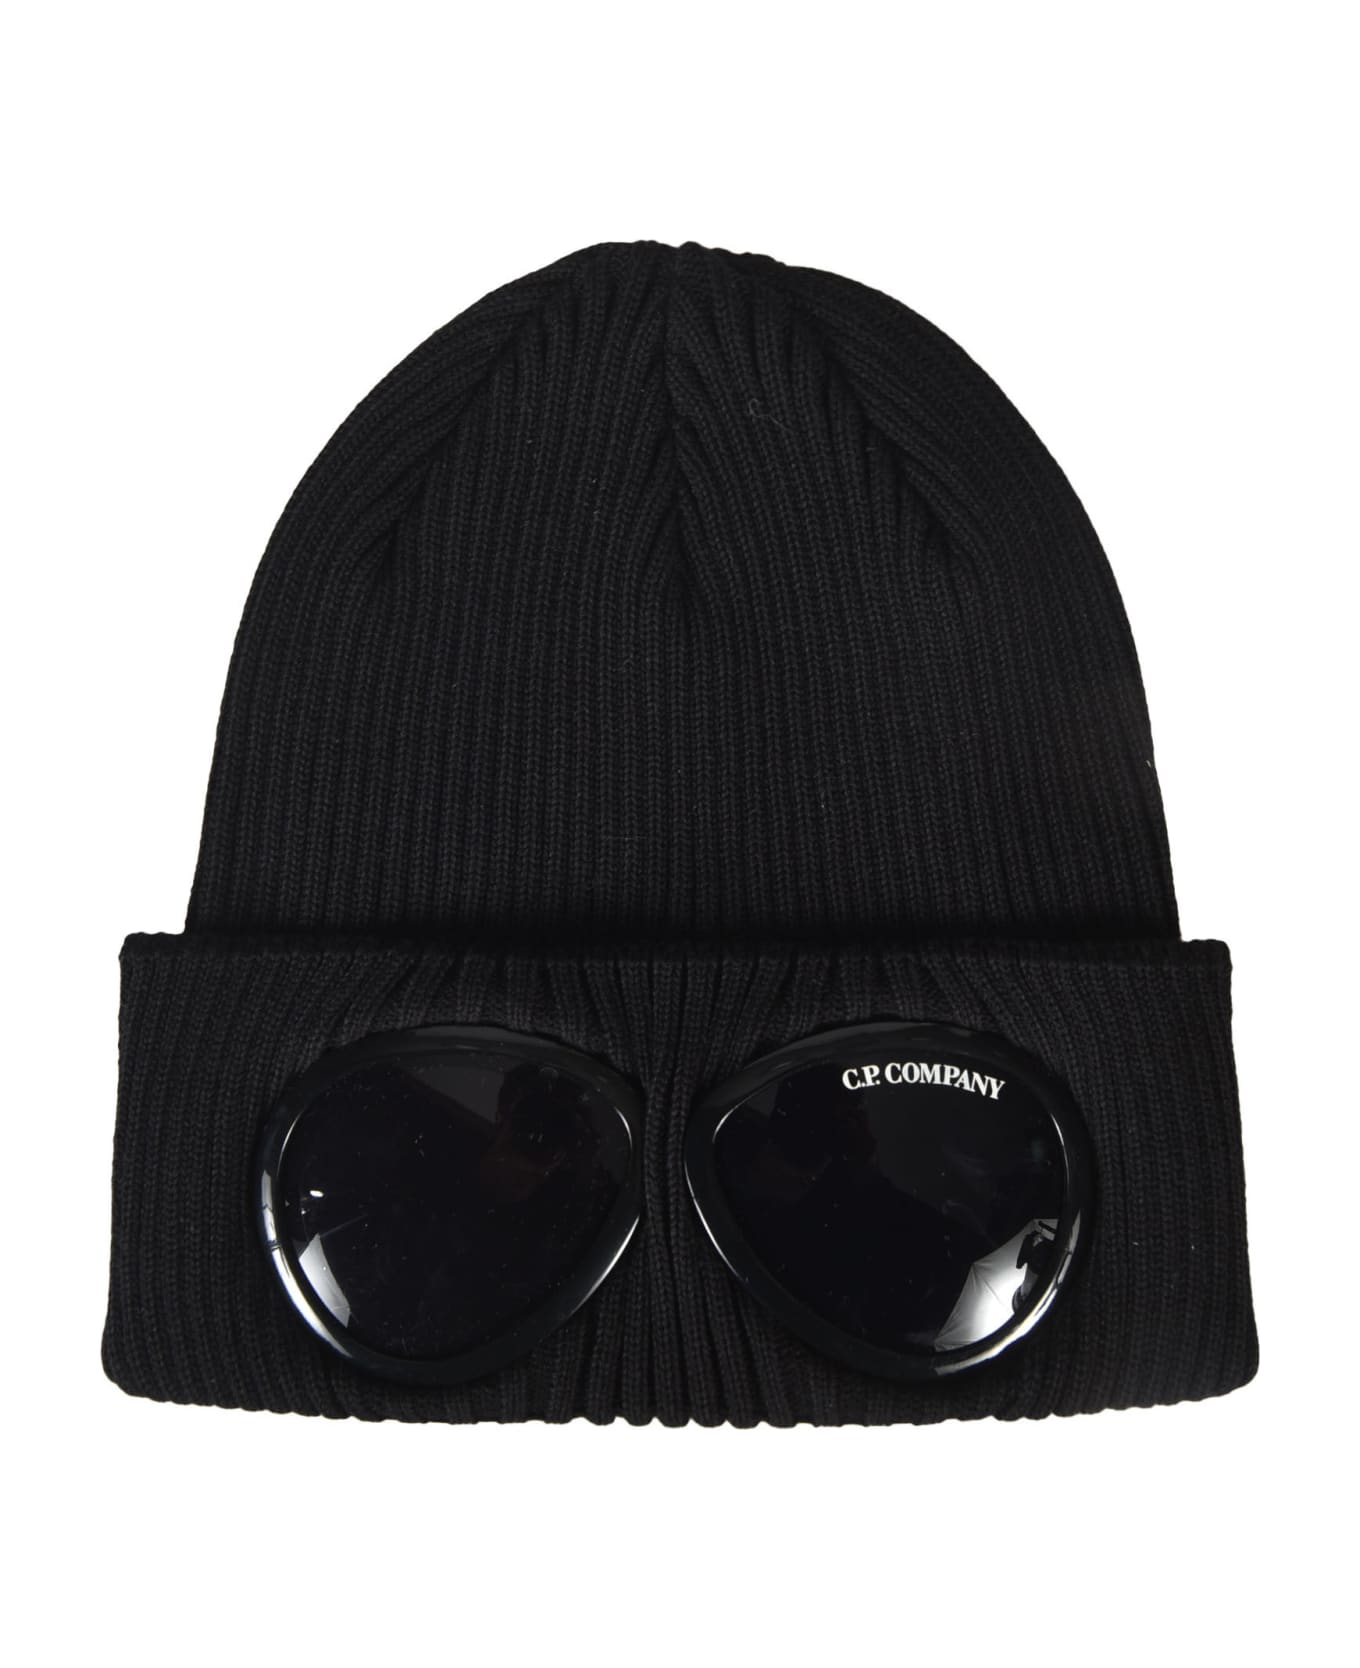 C.P. Company Goggles Knit Beanie - Black